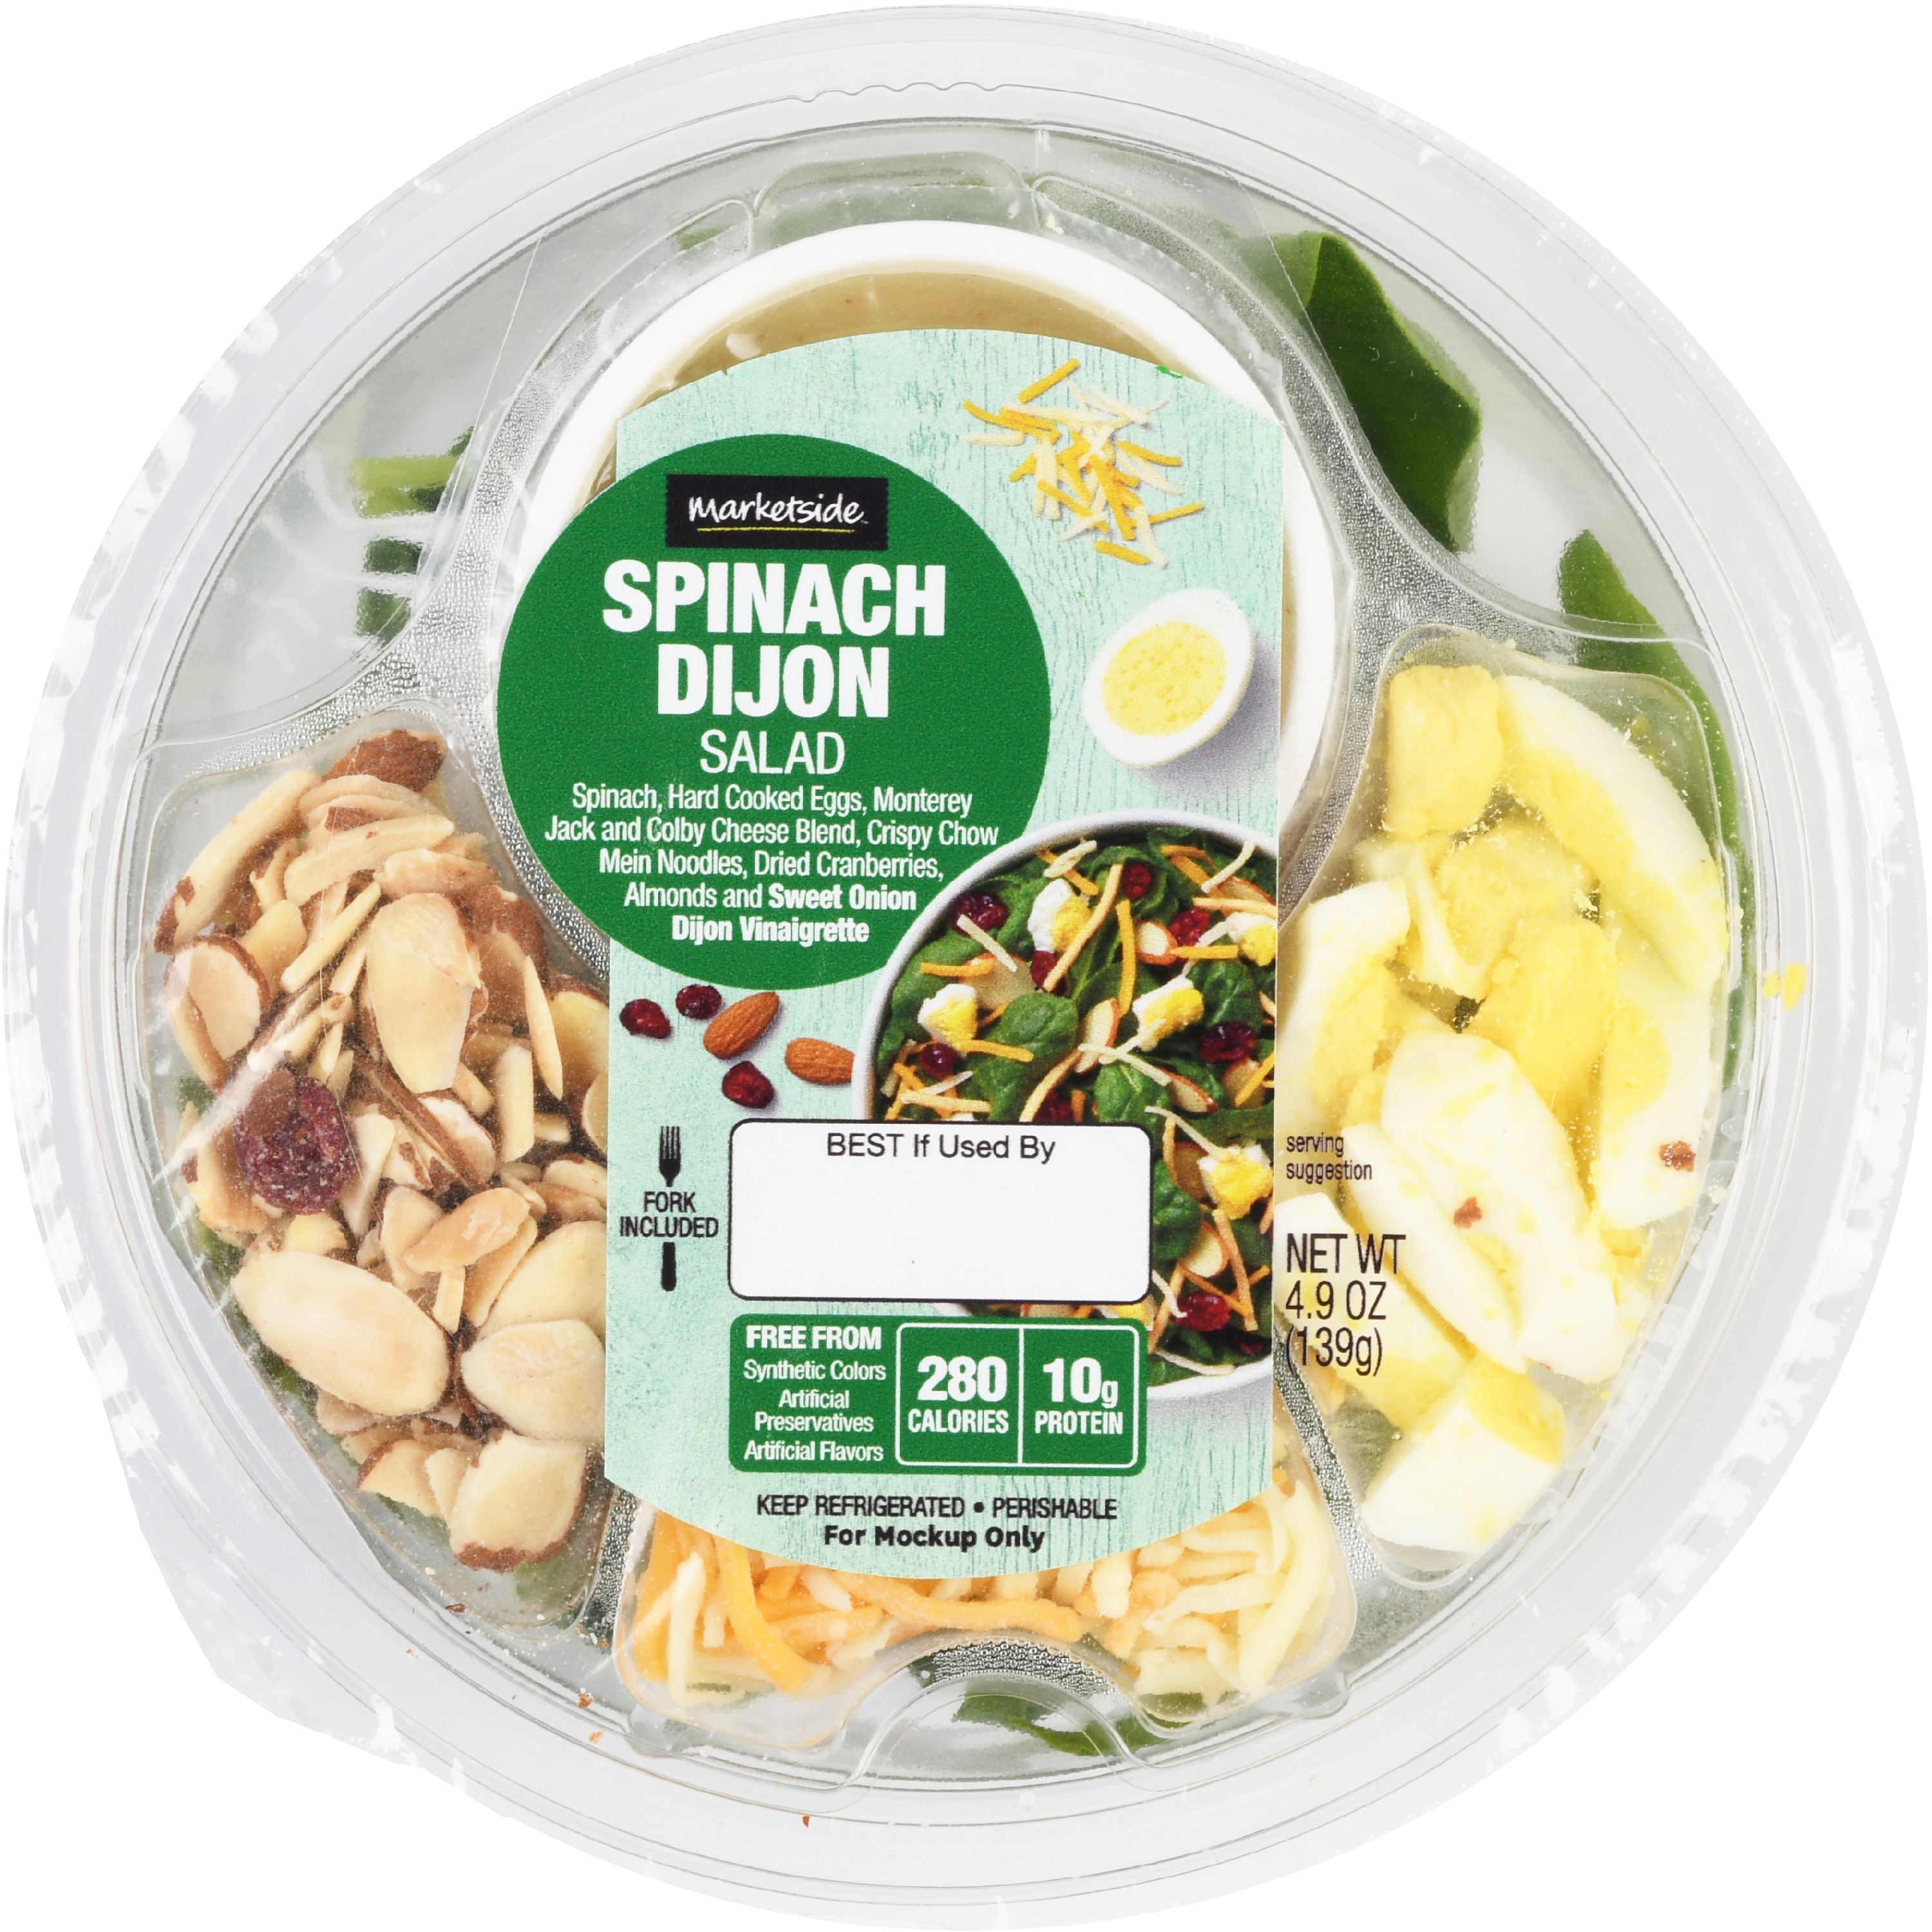 Download Marketside Spinach Dijon Salad 4 9 Oz Walmart Com Walmart Com